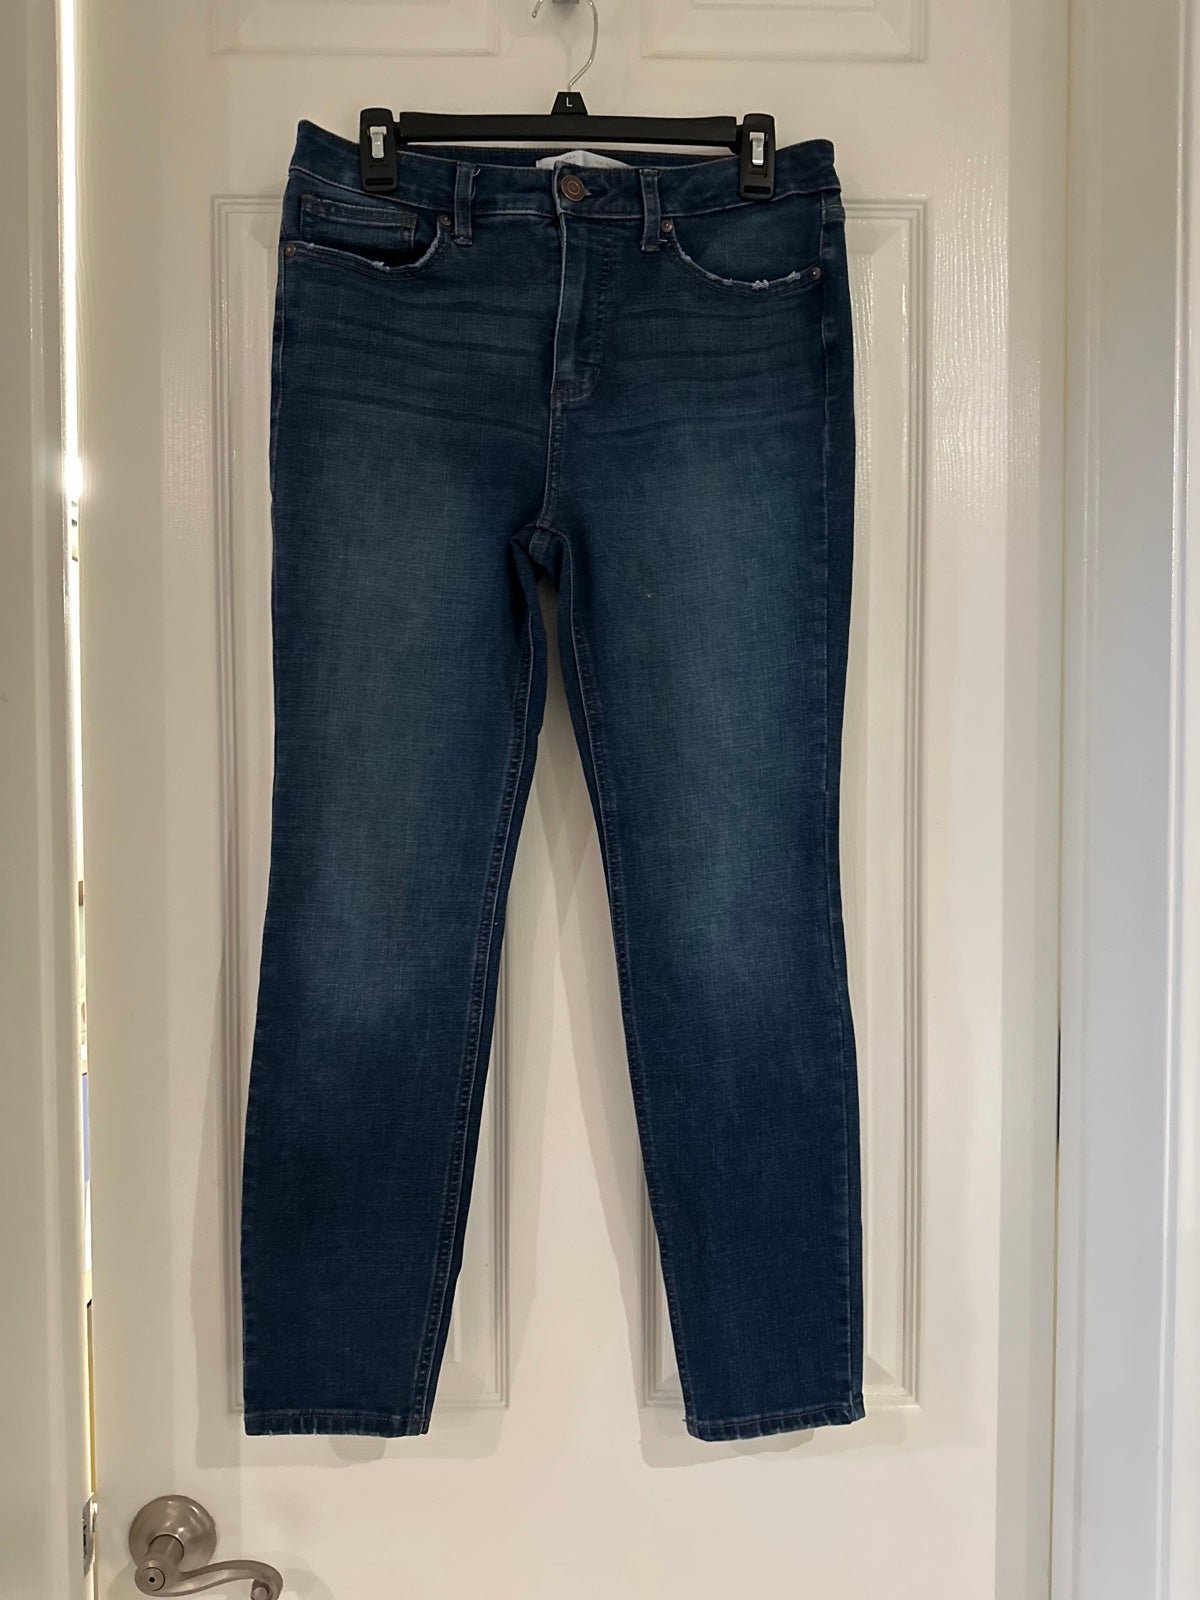 high discount Lauren Conrad High Rise Skinny Jeans NiM7